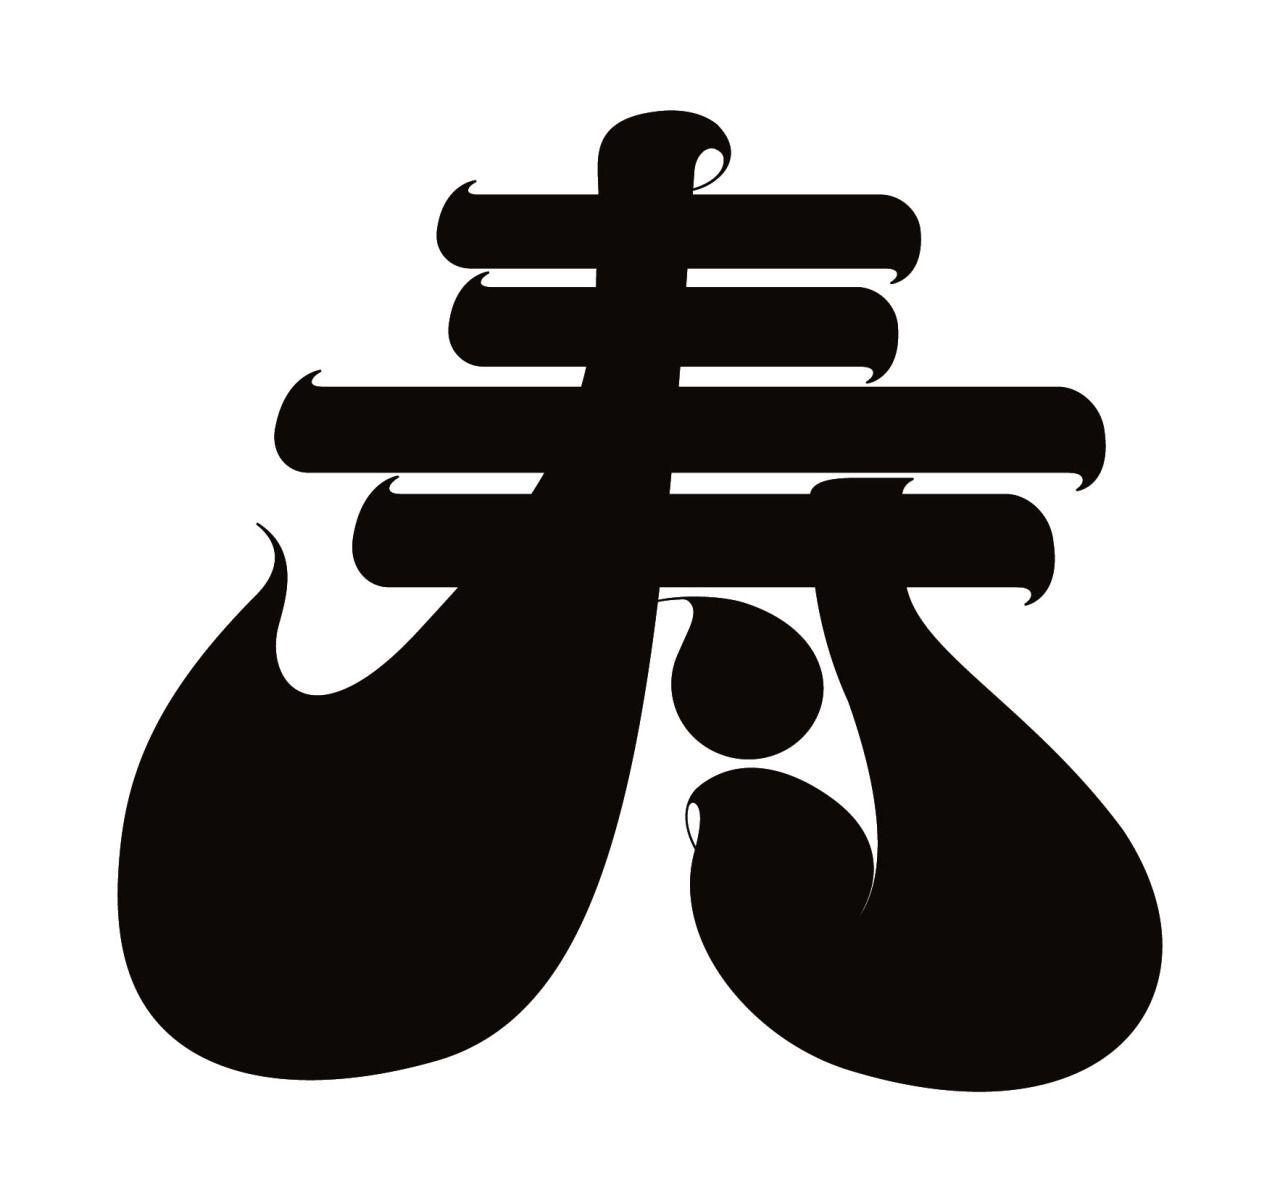 Japanese MP Logo - KOTOBUKIDesign: SasakiShun /post